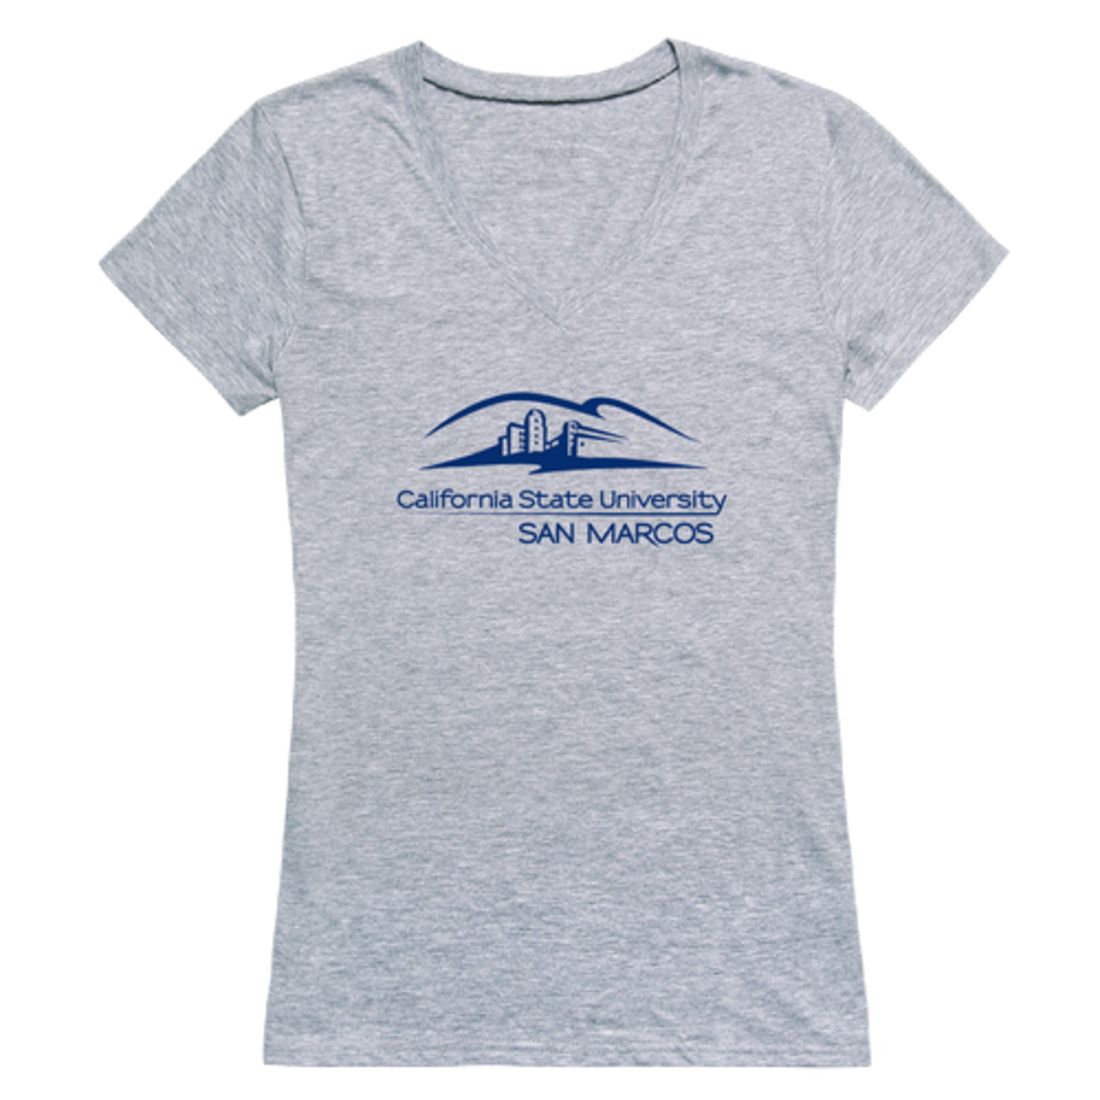 California State University San Marcos Cougars Womens Seal T-Shirt Tee